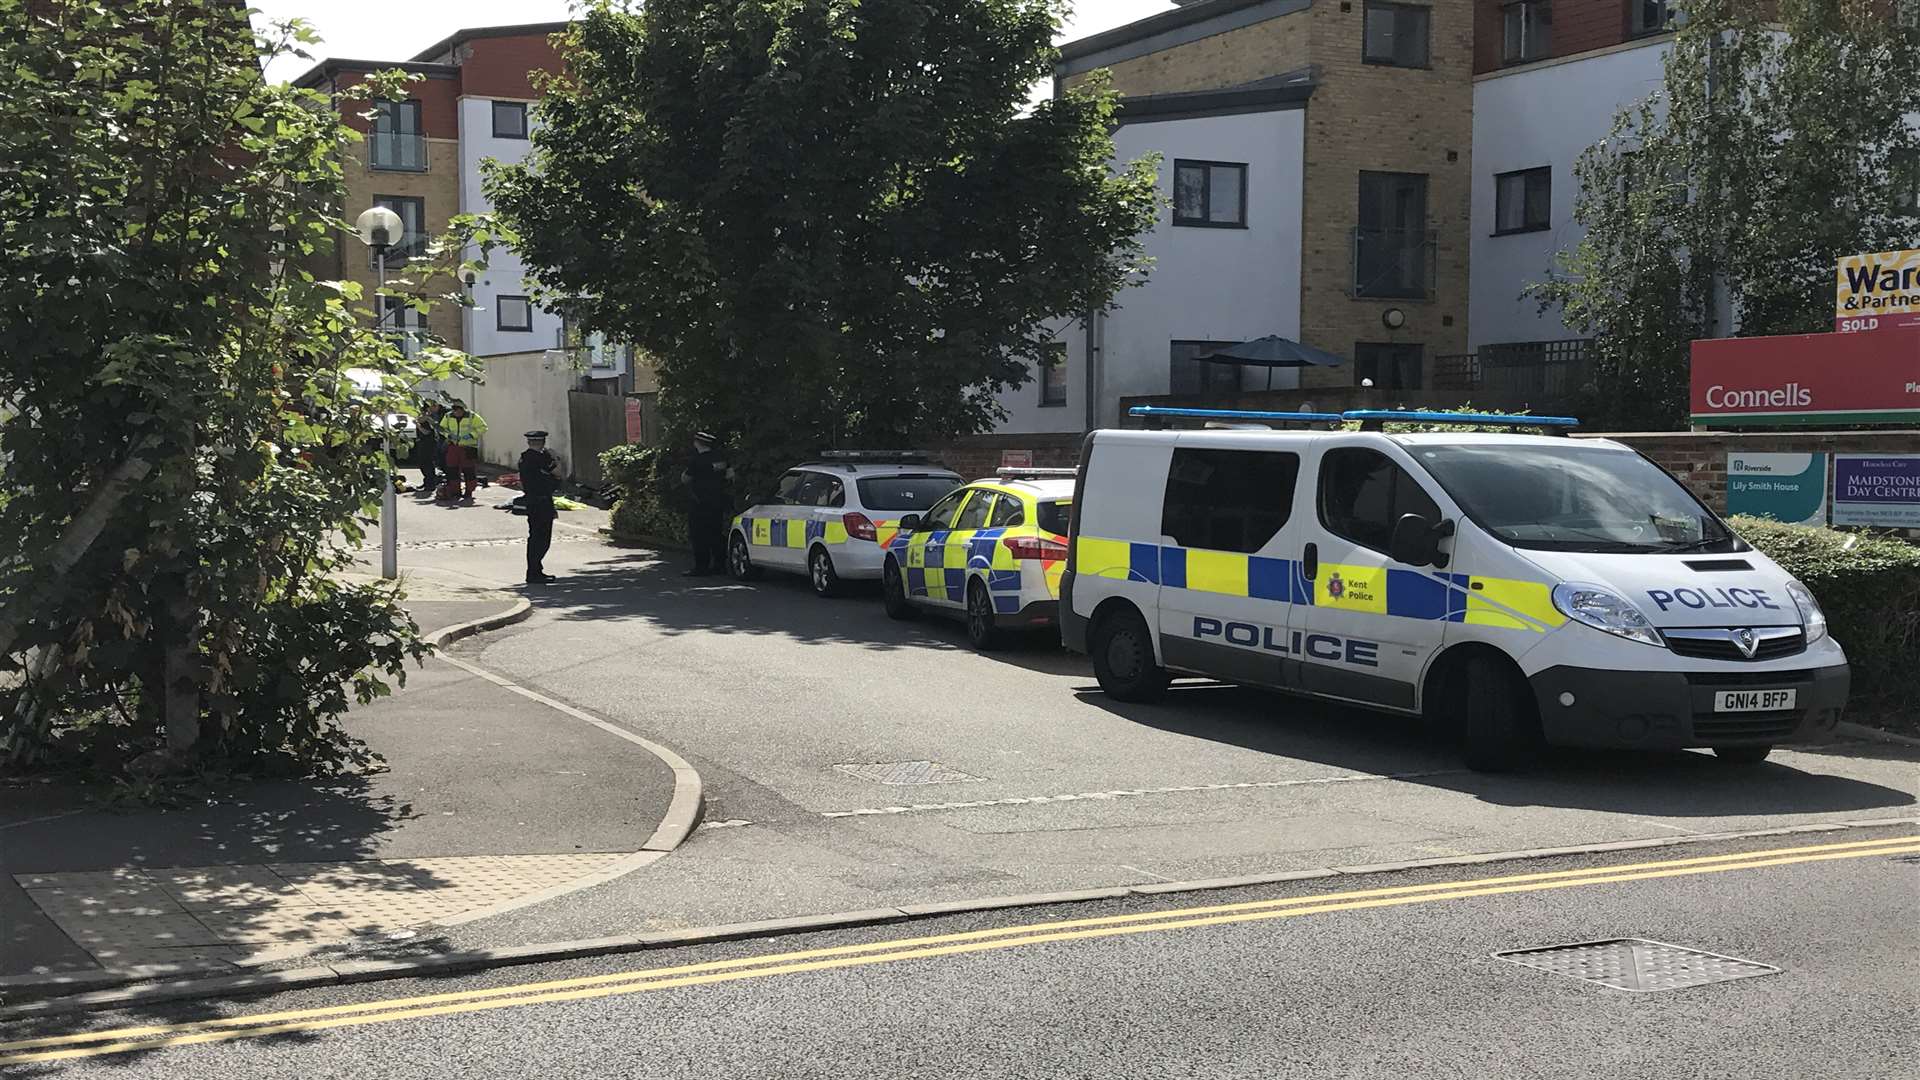 Police were called to Knightrider Street